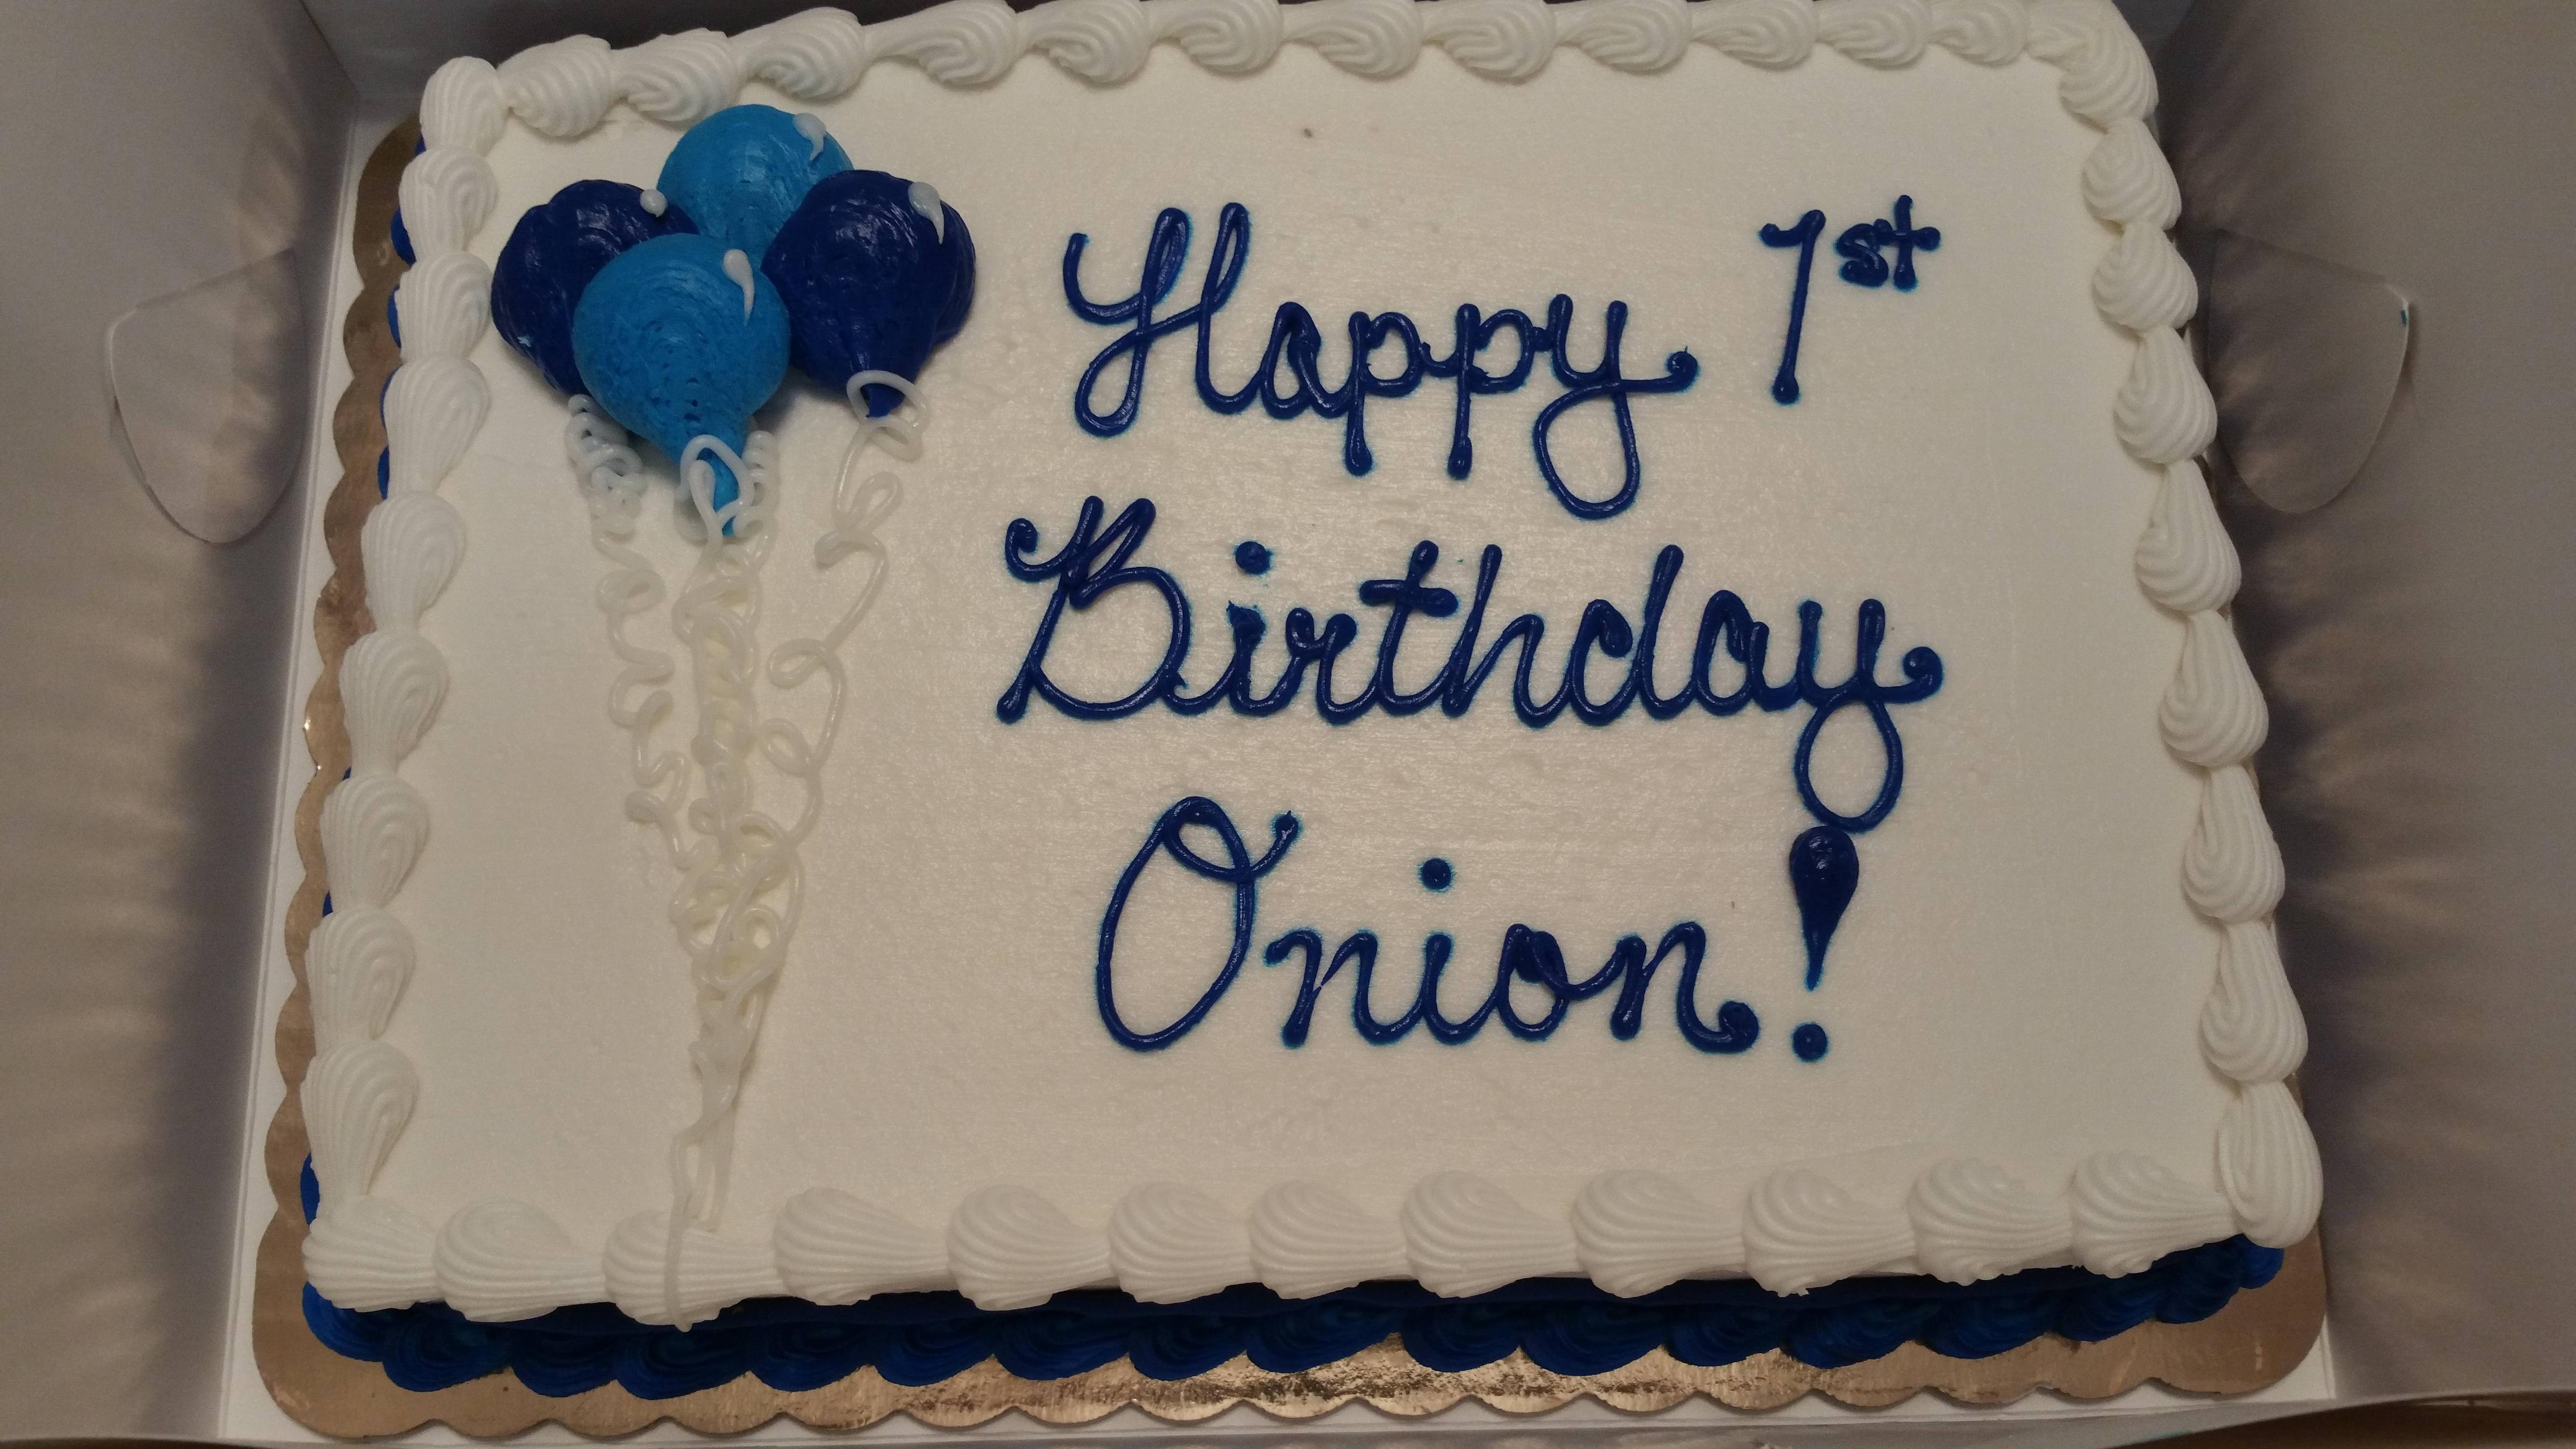 happy birthday in cursive on cake - Happy 1 Birthday Onion!